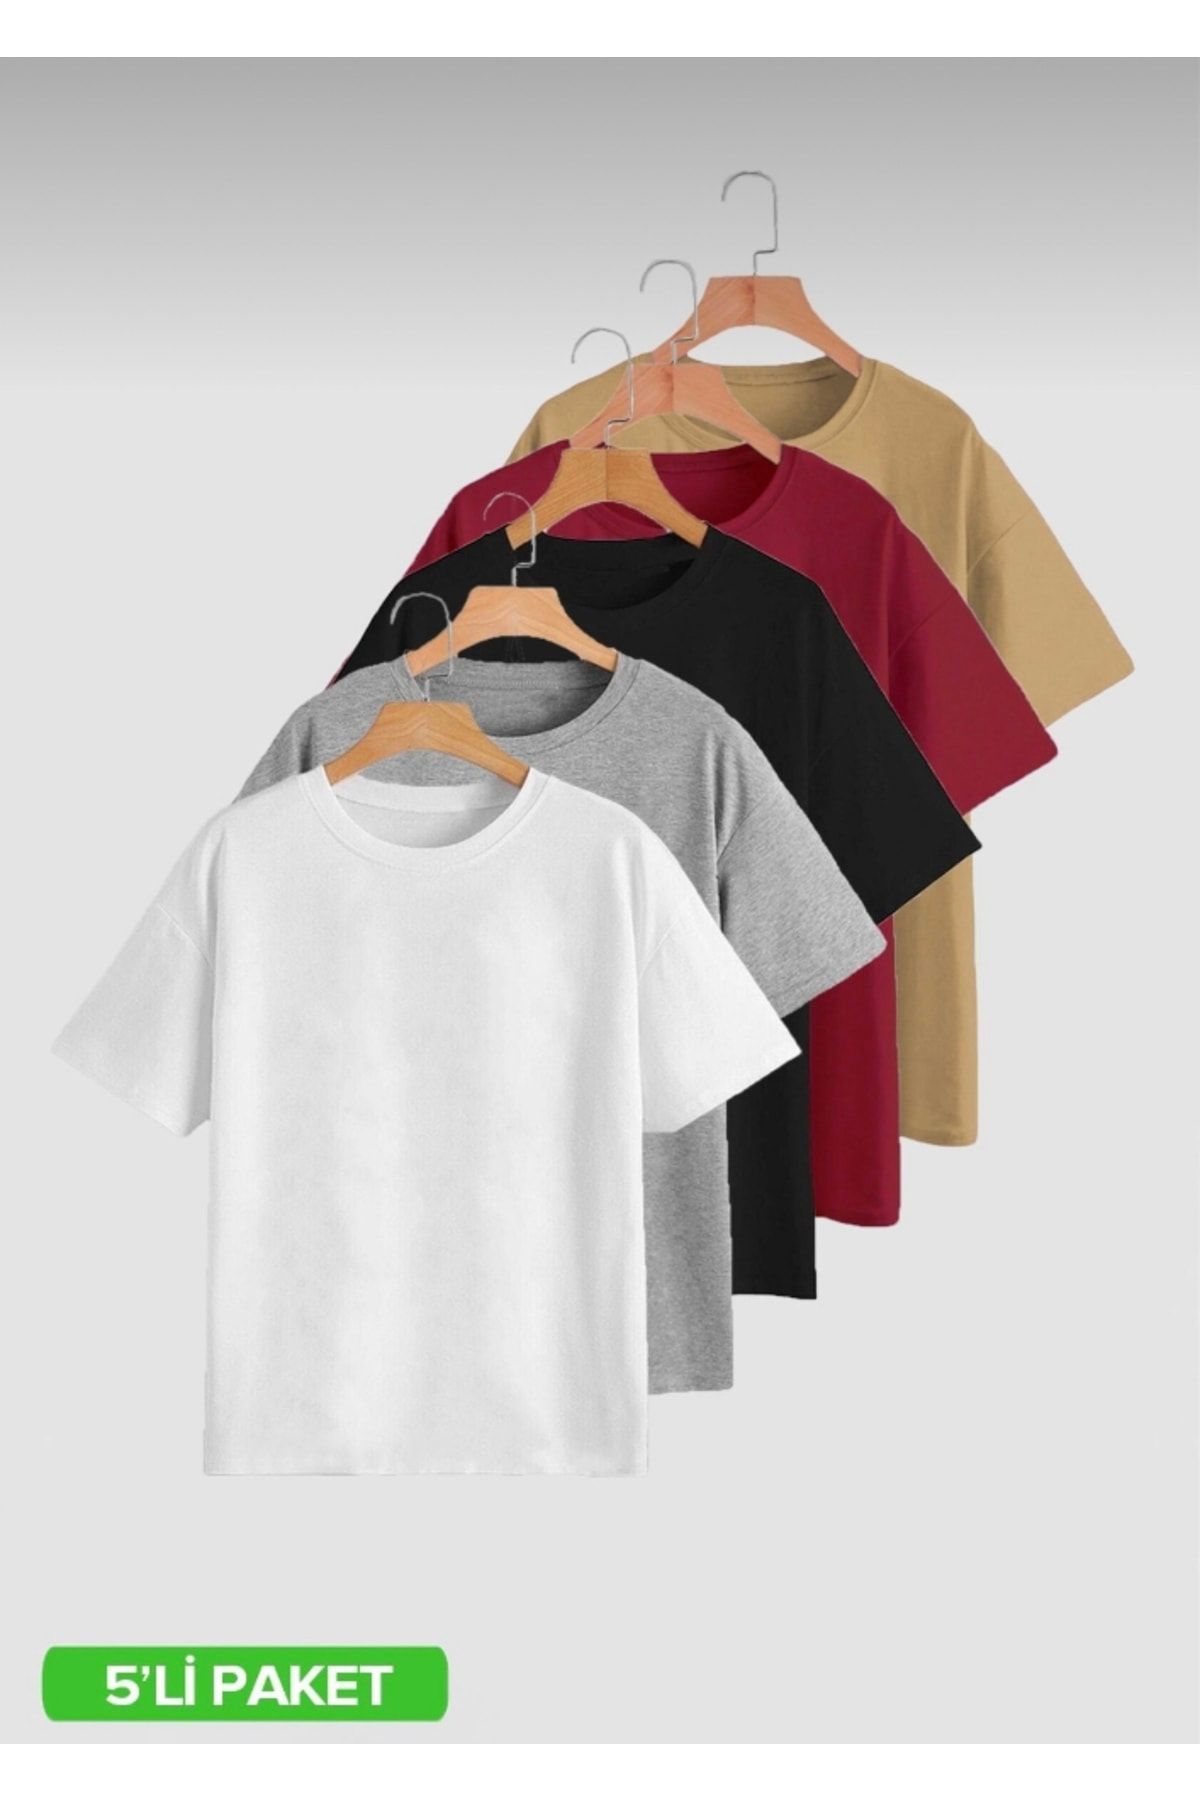 JAKARLI 5’li Paket Oversize Beyaz Gri Siyah Bordo Bej T-shirt